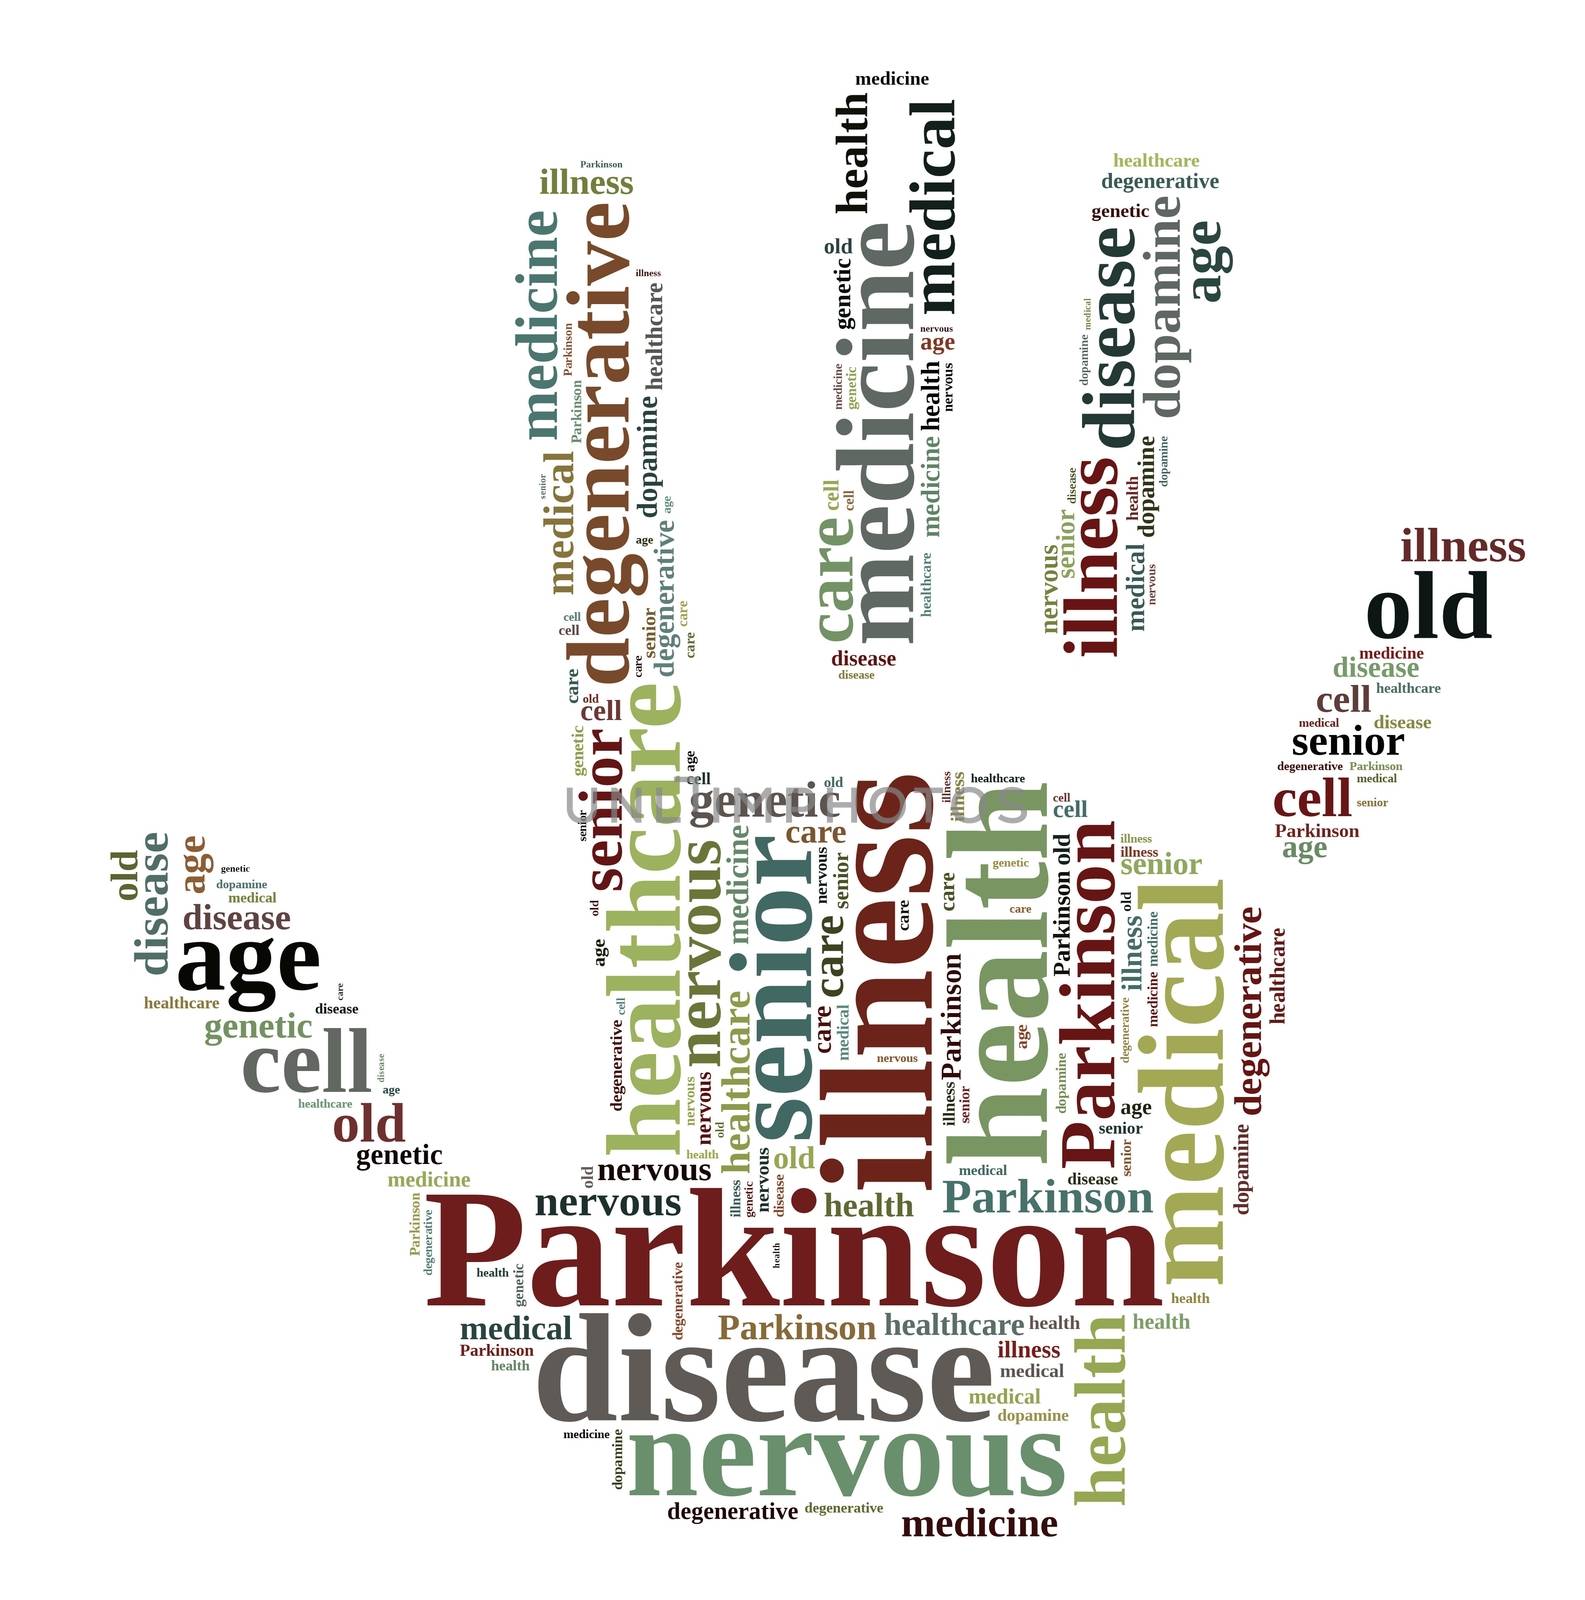 Word cloud illustration on Parkinson's disease.